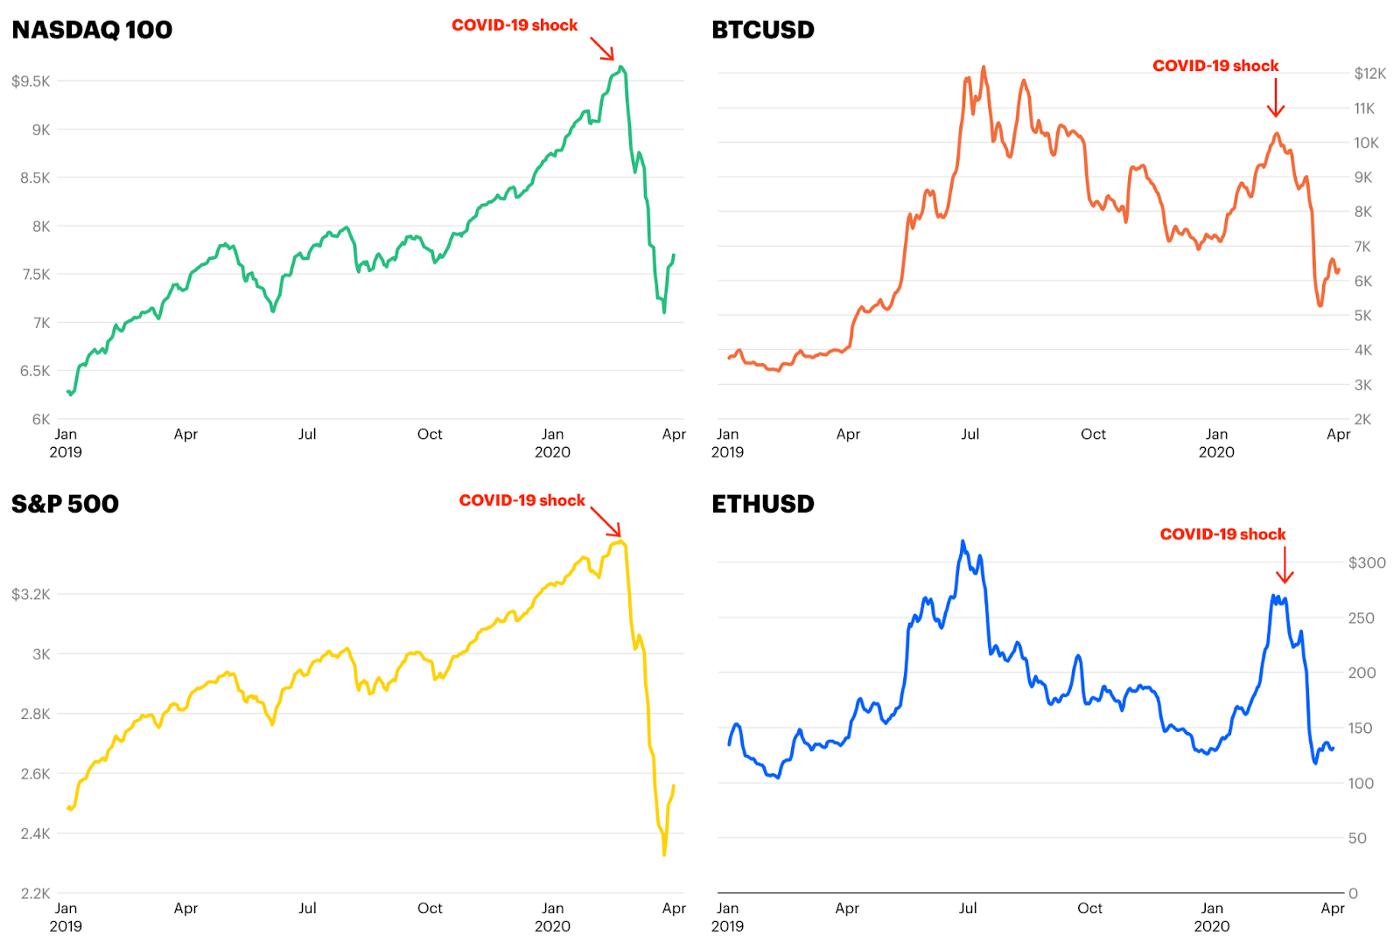 The crypto market downturn explained - COVID-19 shock on markets and crypto